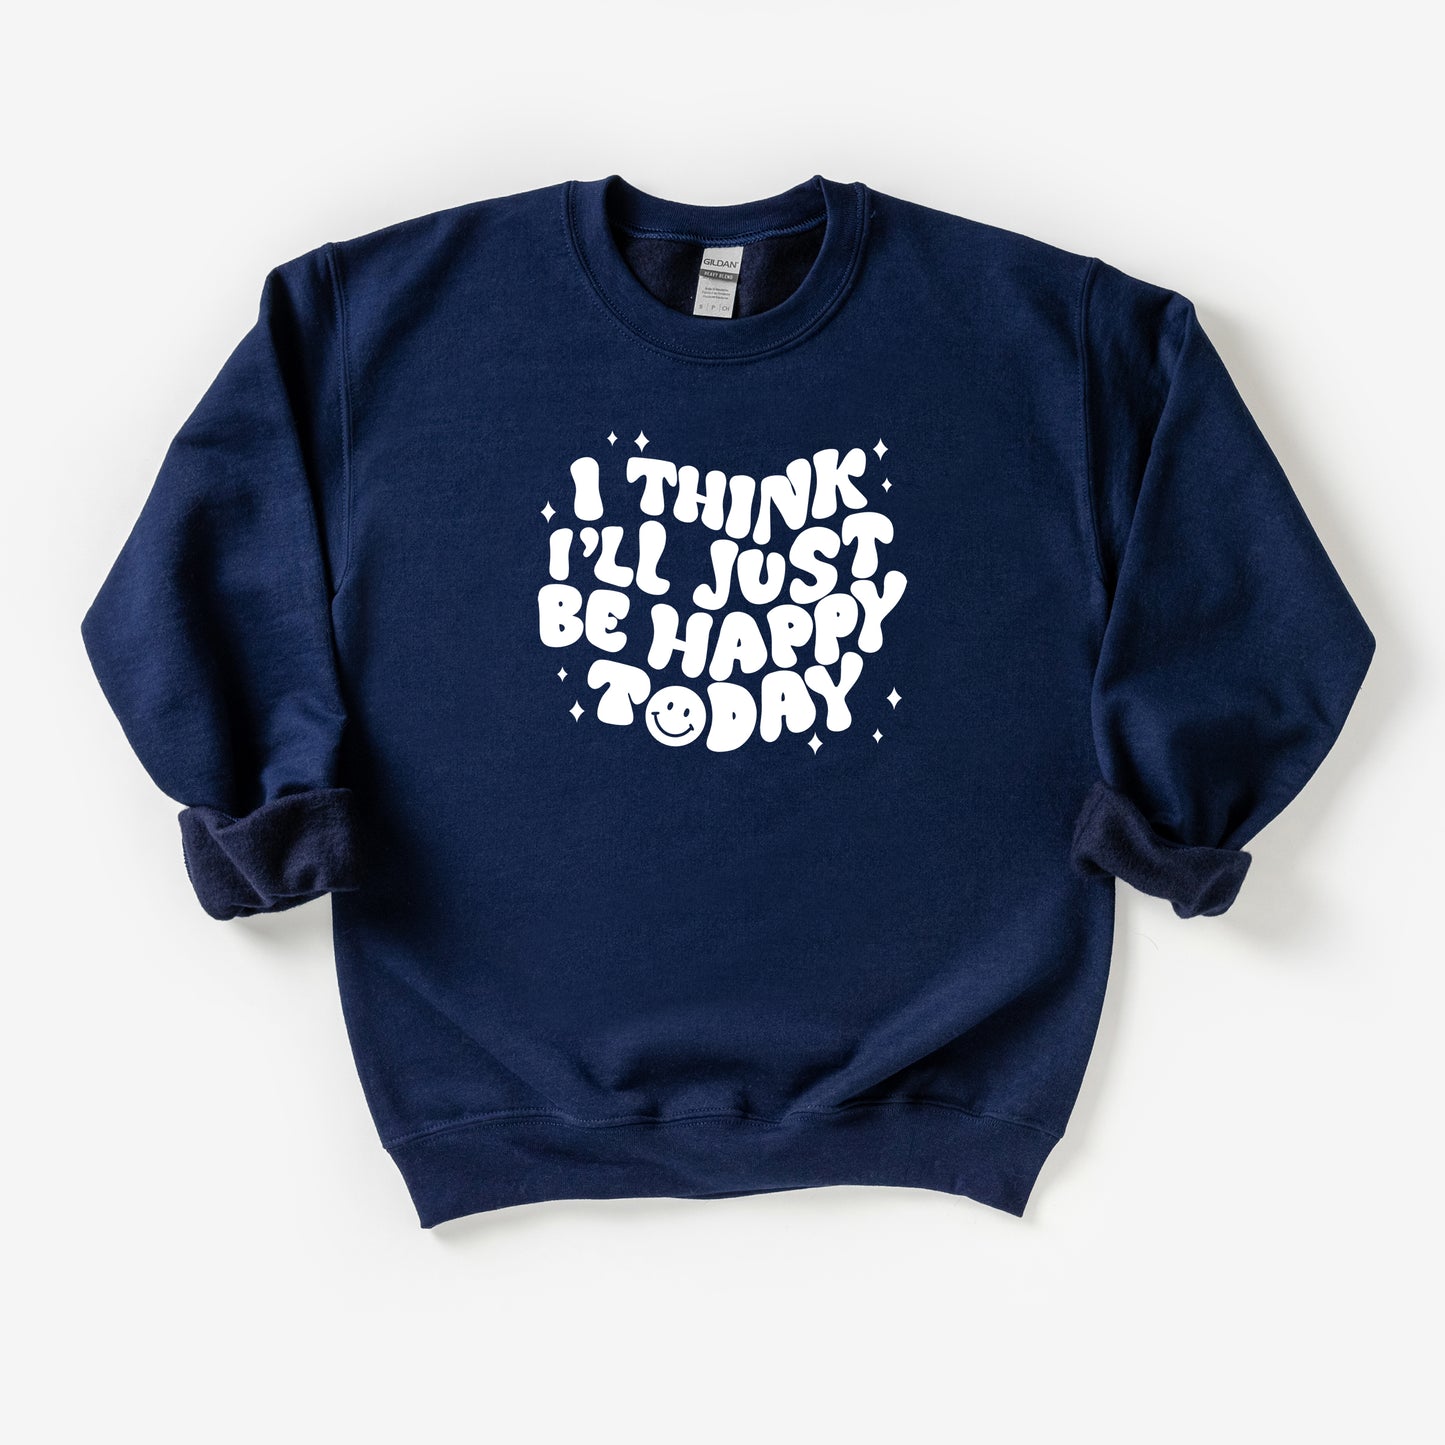 I'll Just Be Happy Today | Youth Sweatshirt